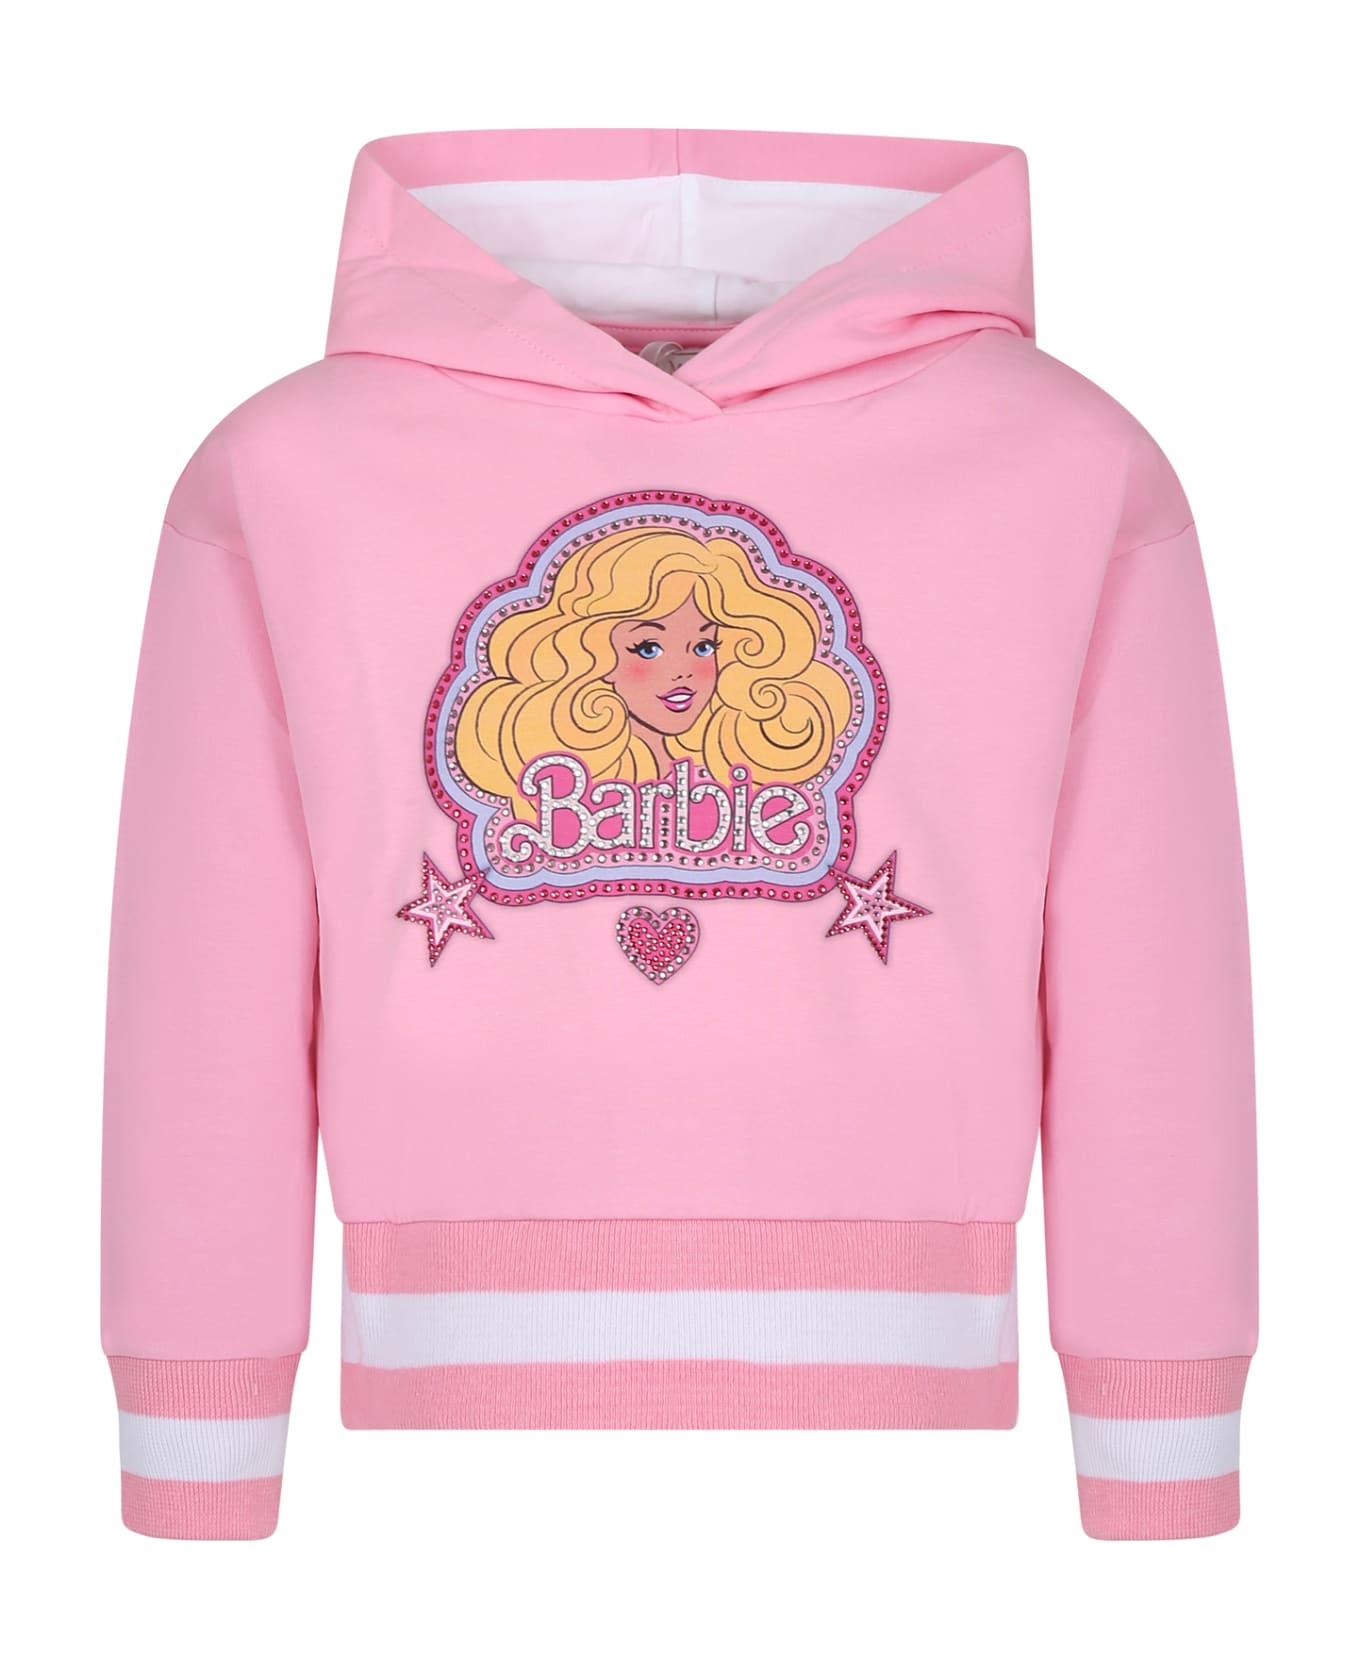 Monnalisa Pink Sweatshirt For Girl With Barbie Print And Rhinestone - Pink